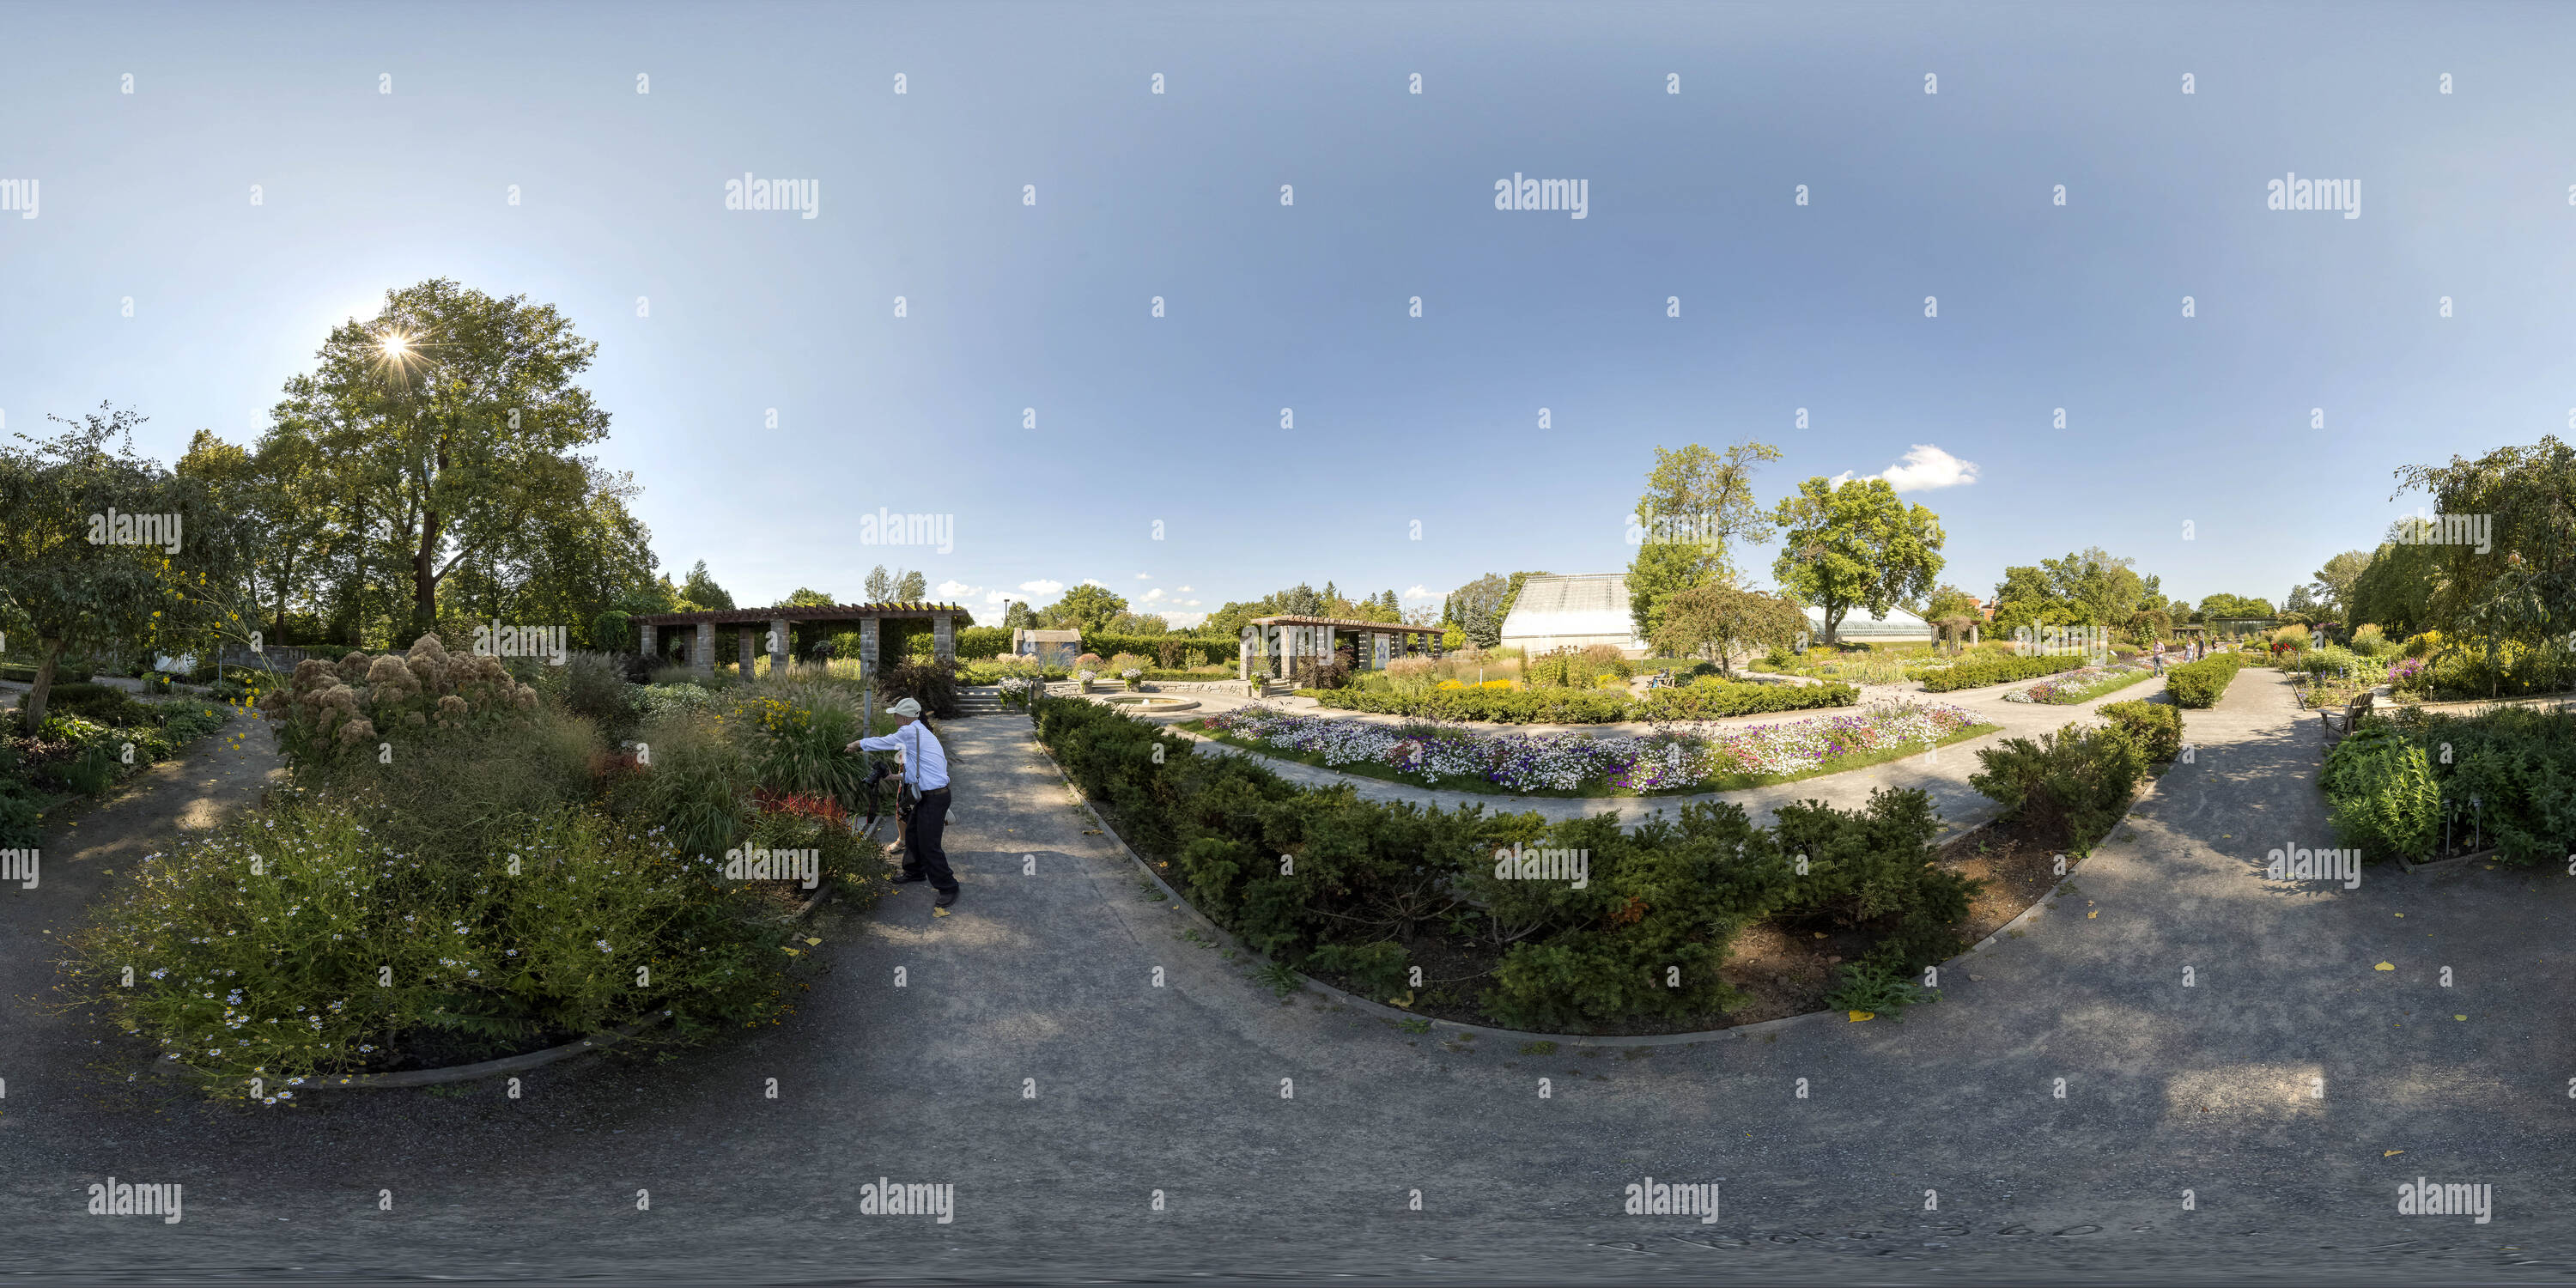 360° view of Jardin Botanique De Montreal 5 - Alamy